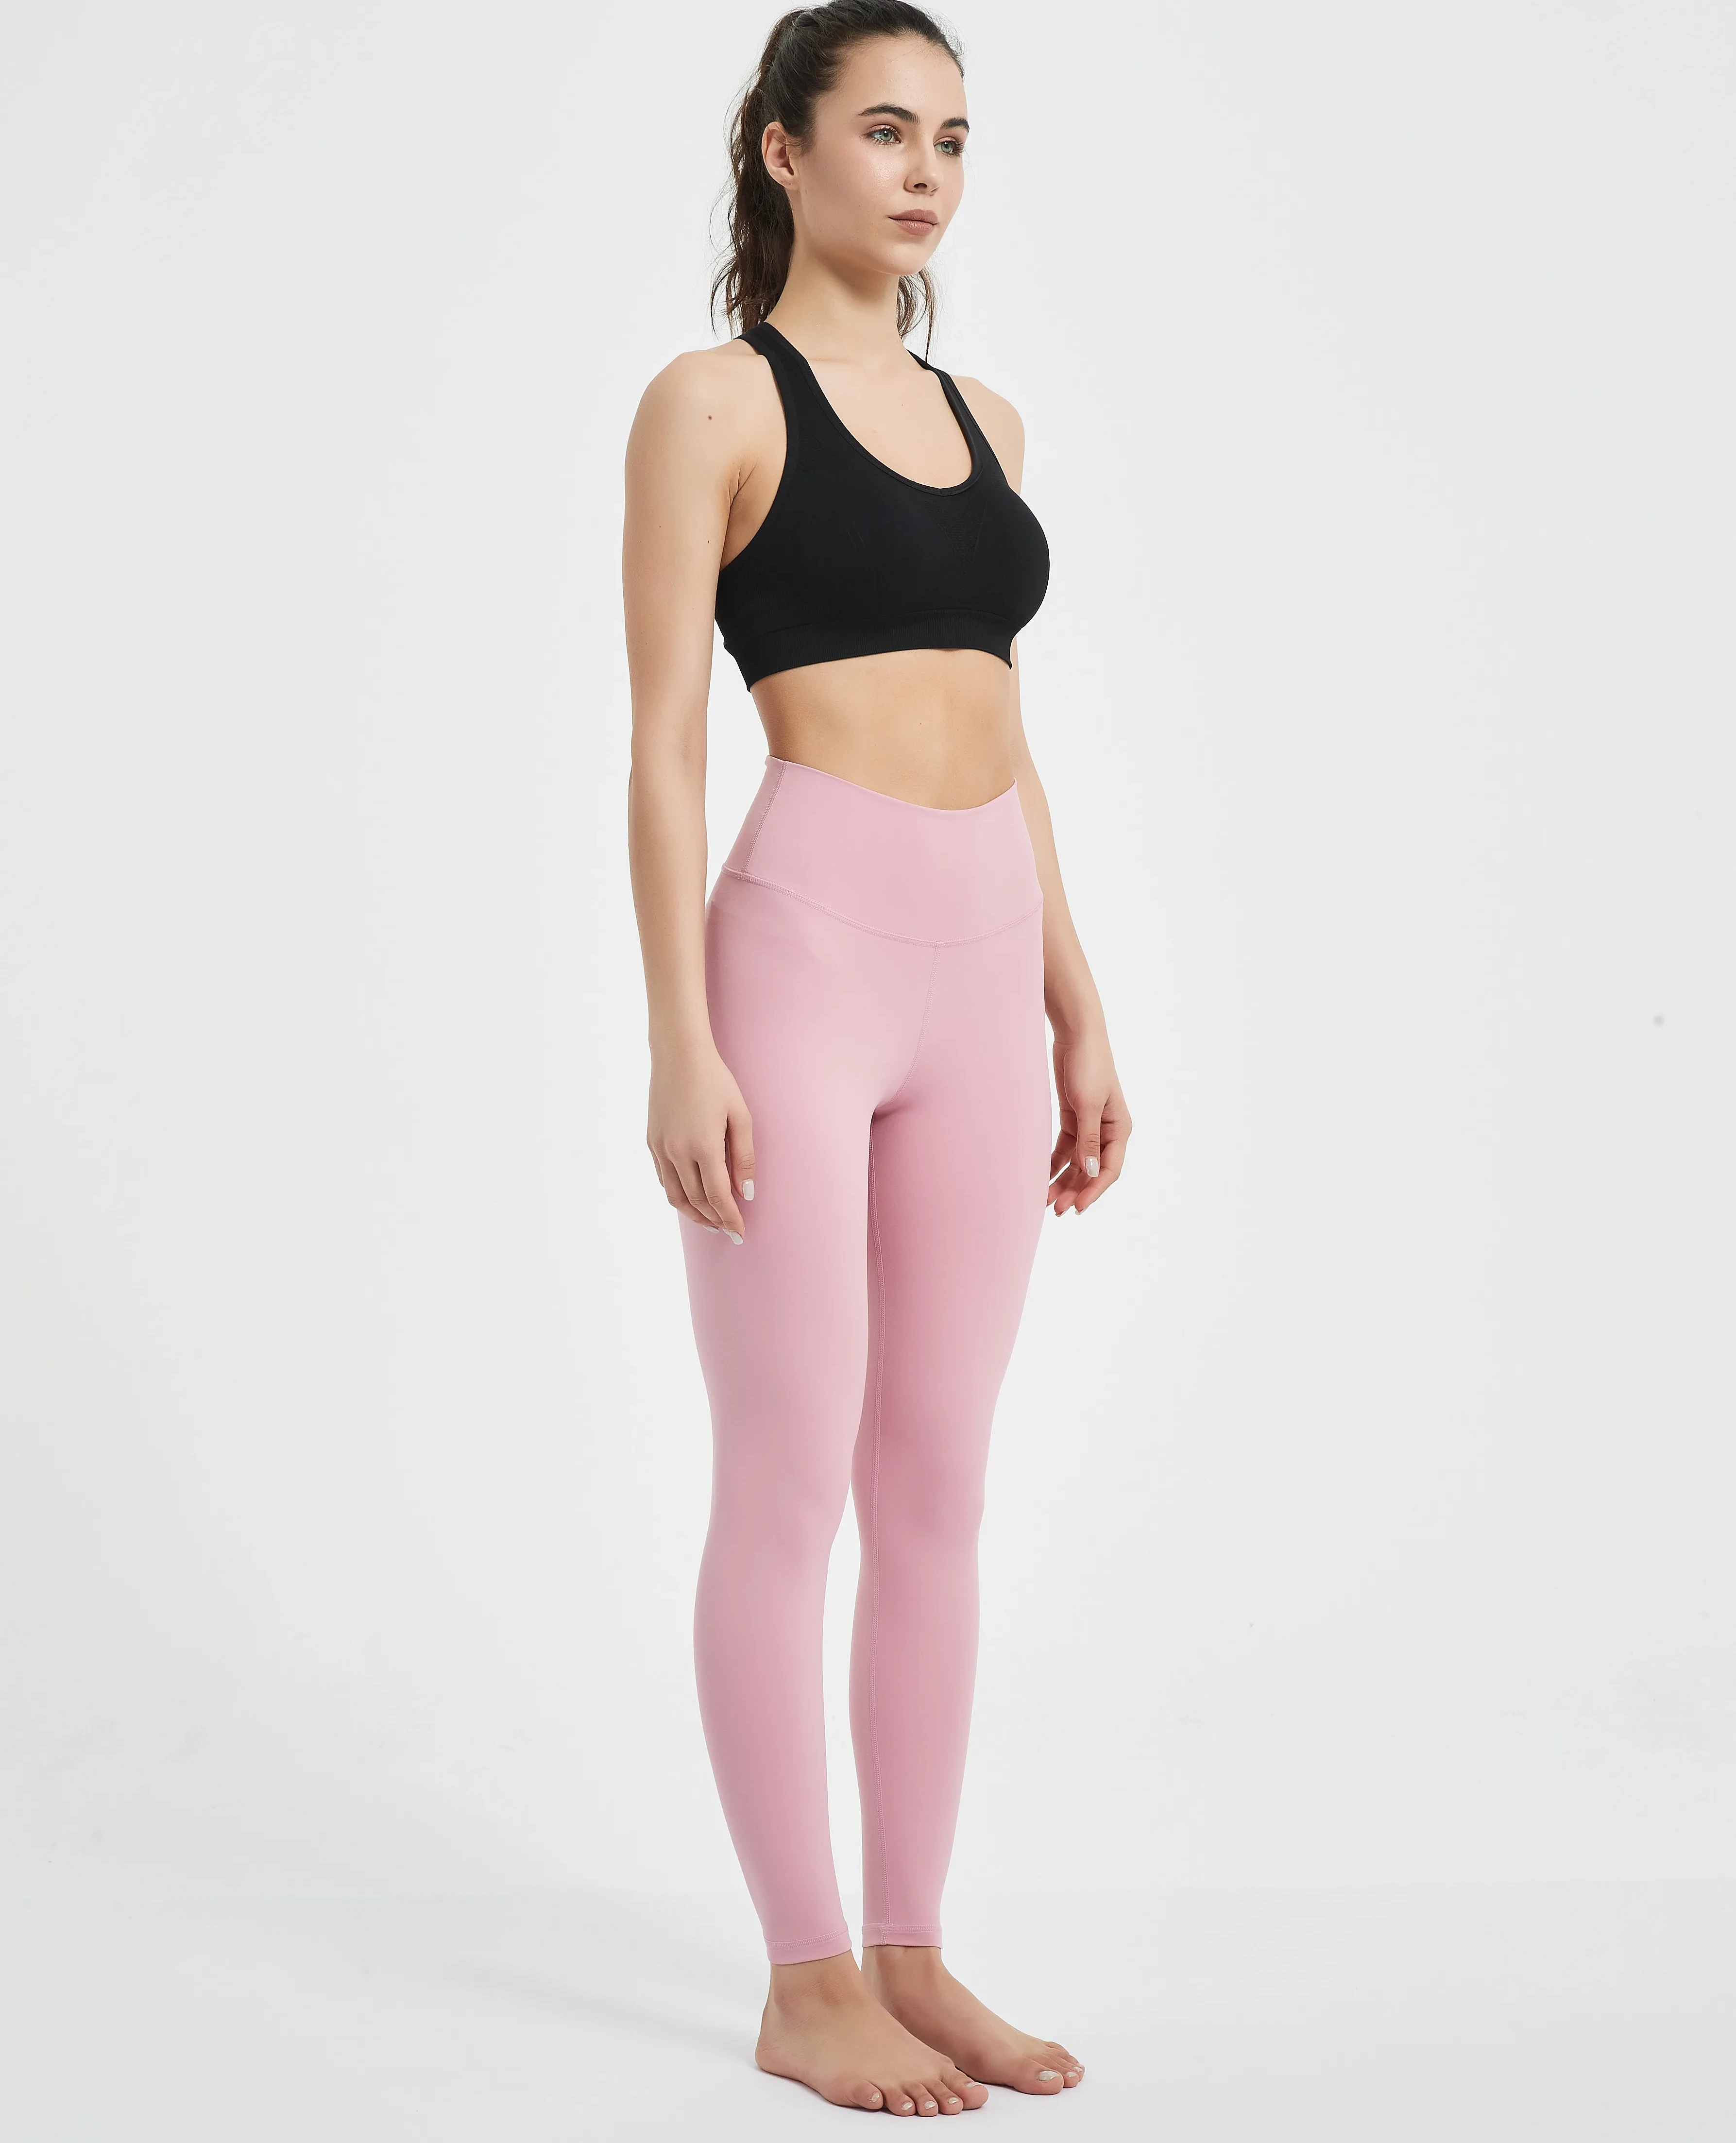 Colorfulkoala Women's High Waisted Tummy Control Workout Leggings 7/8  Length Ultra Soft Yoga Pants 28 (L, Mauve Pink)